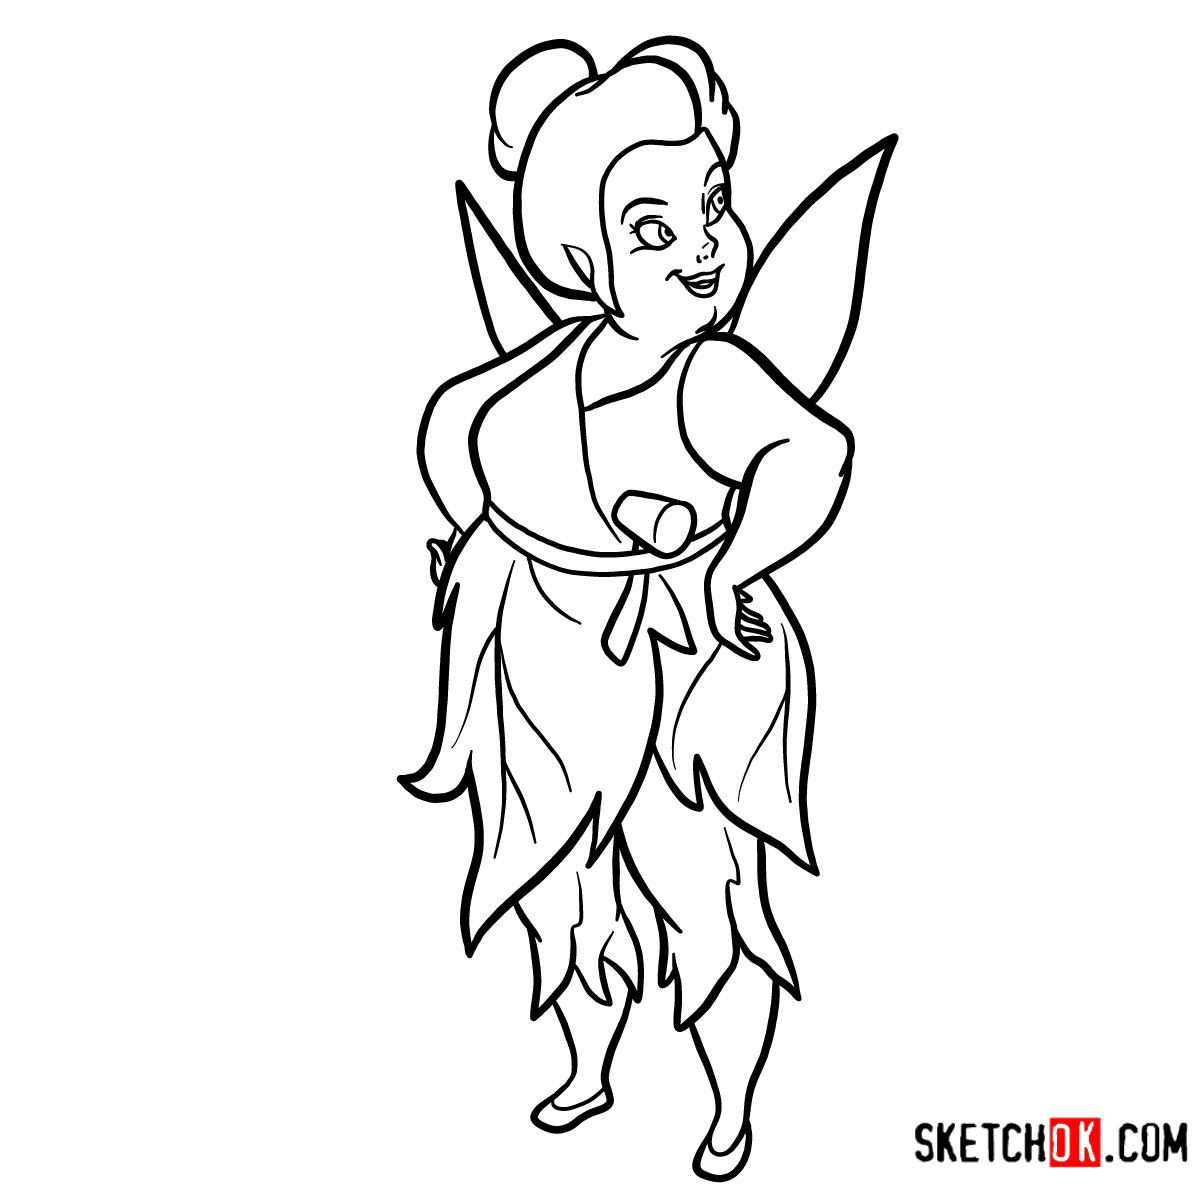 How to draw Fairy Mary | Disney Fairies